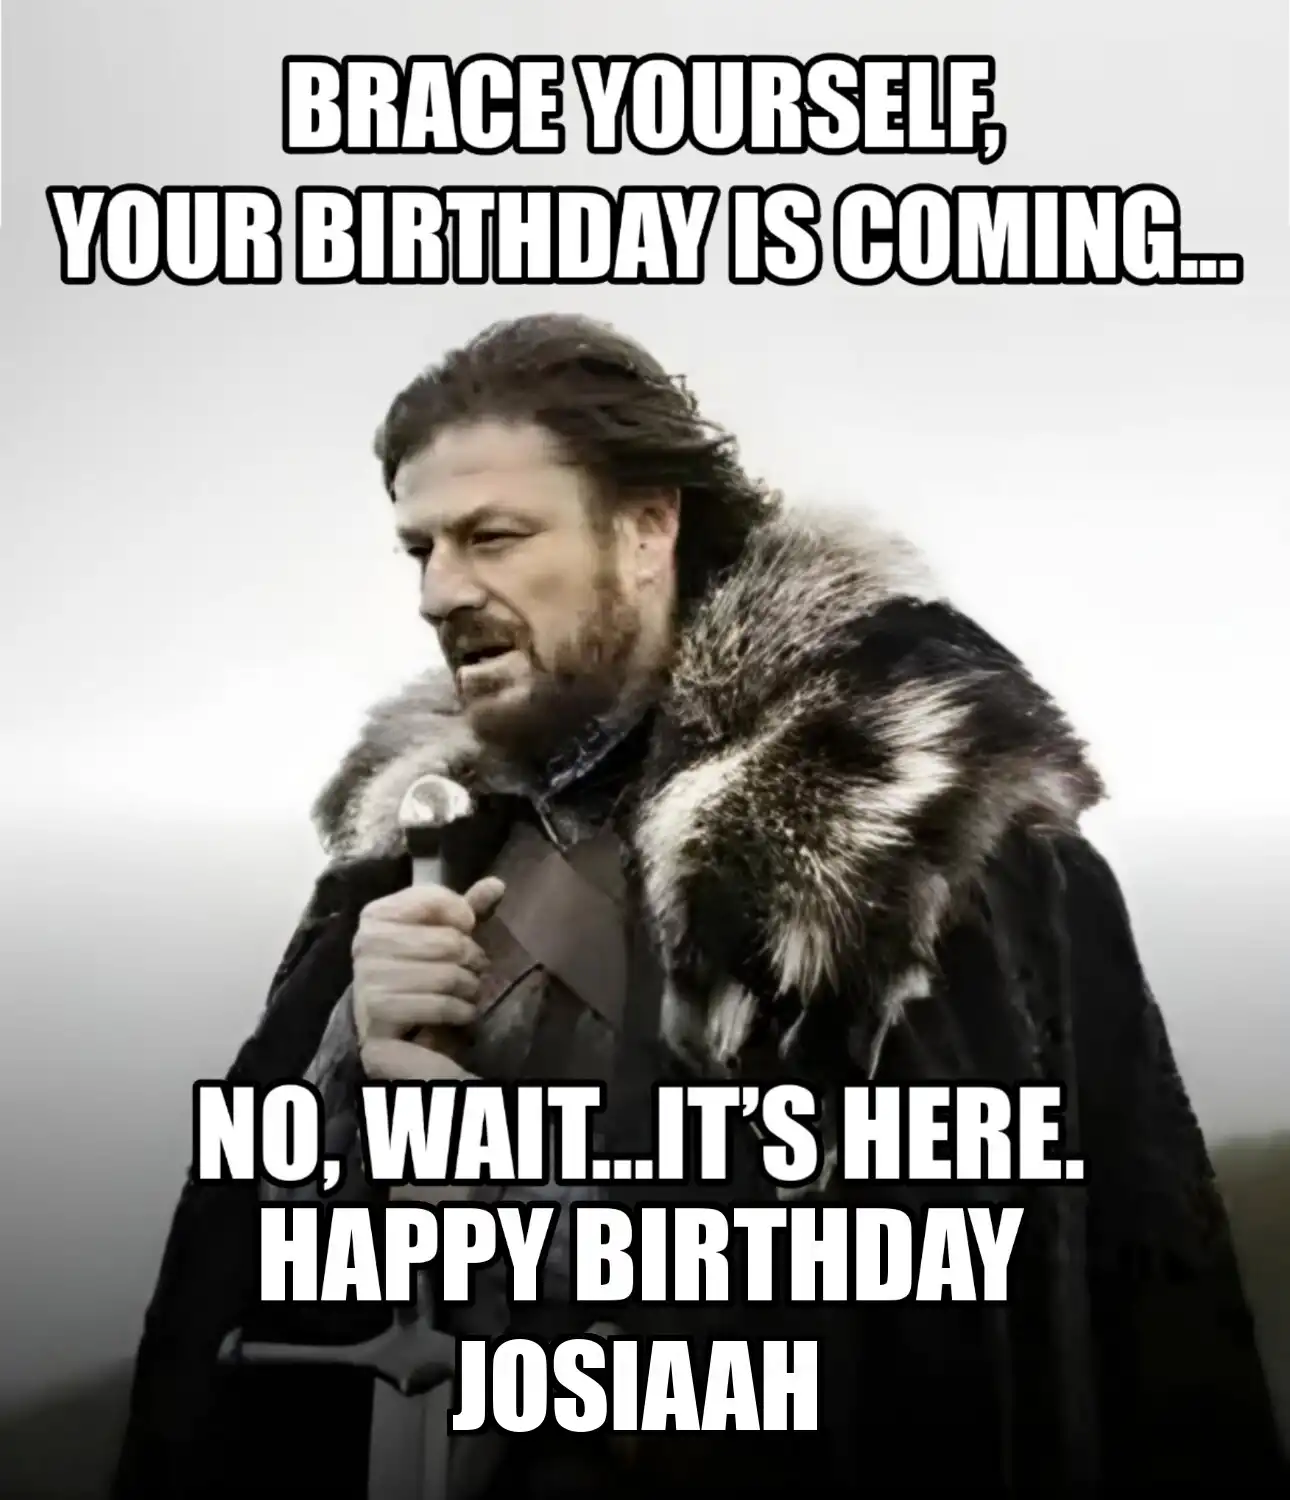 Happy Birthday Josiaah Brace Yourself Your Birthday Is Coming Meme